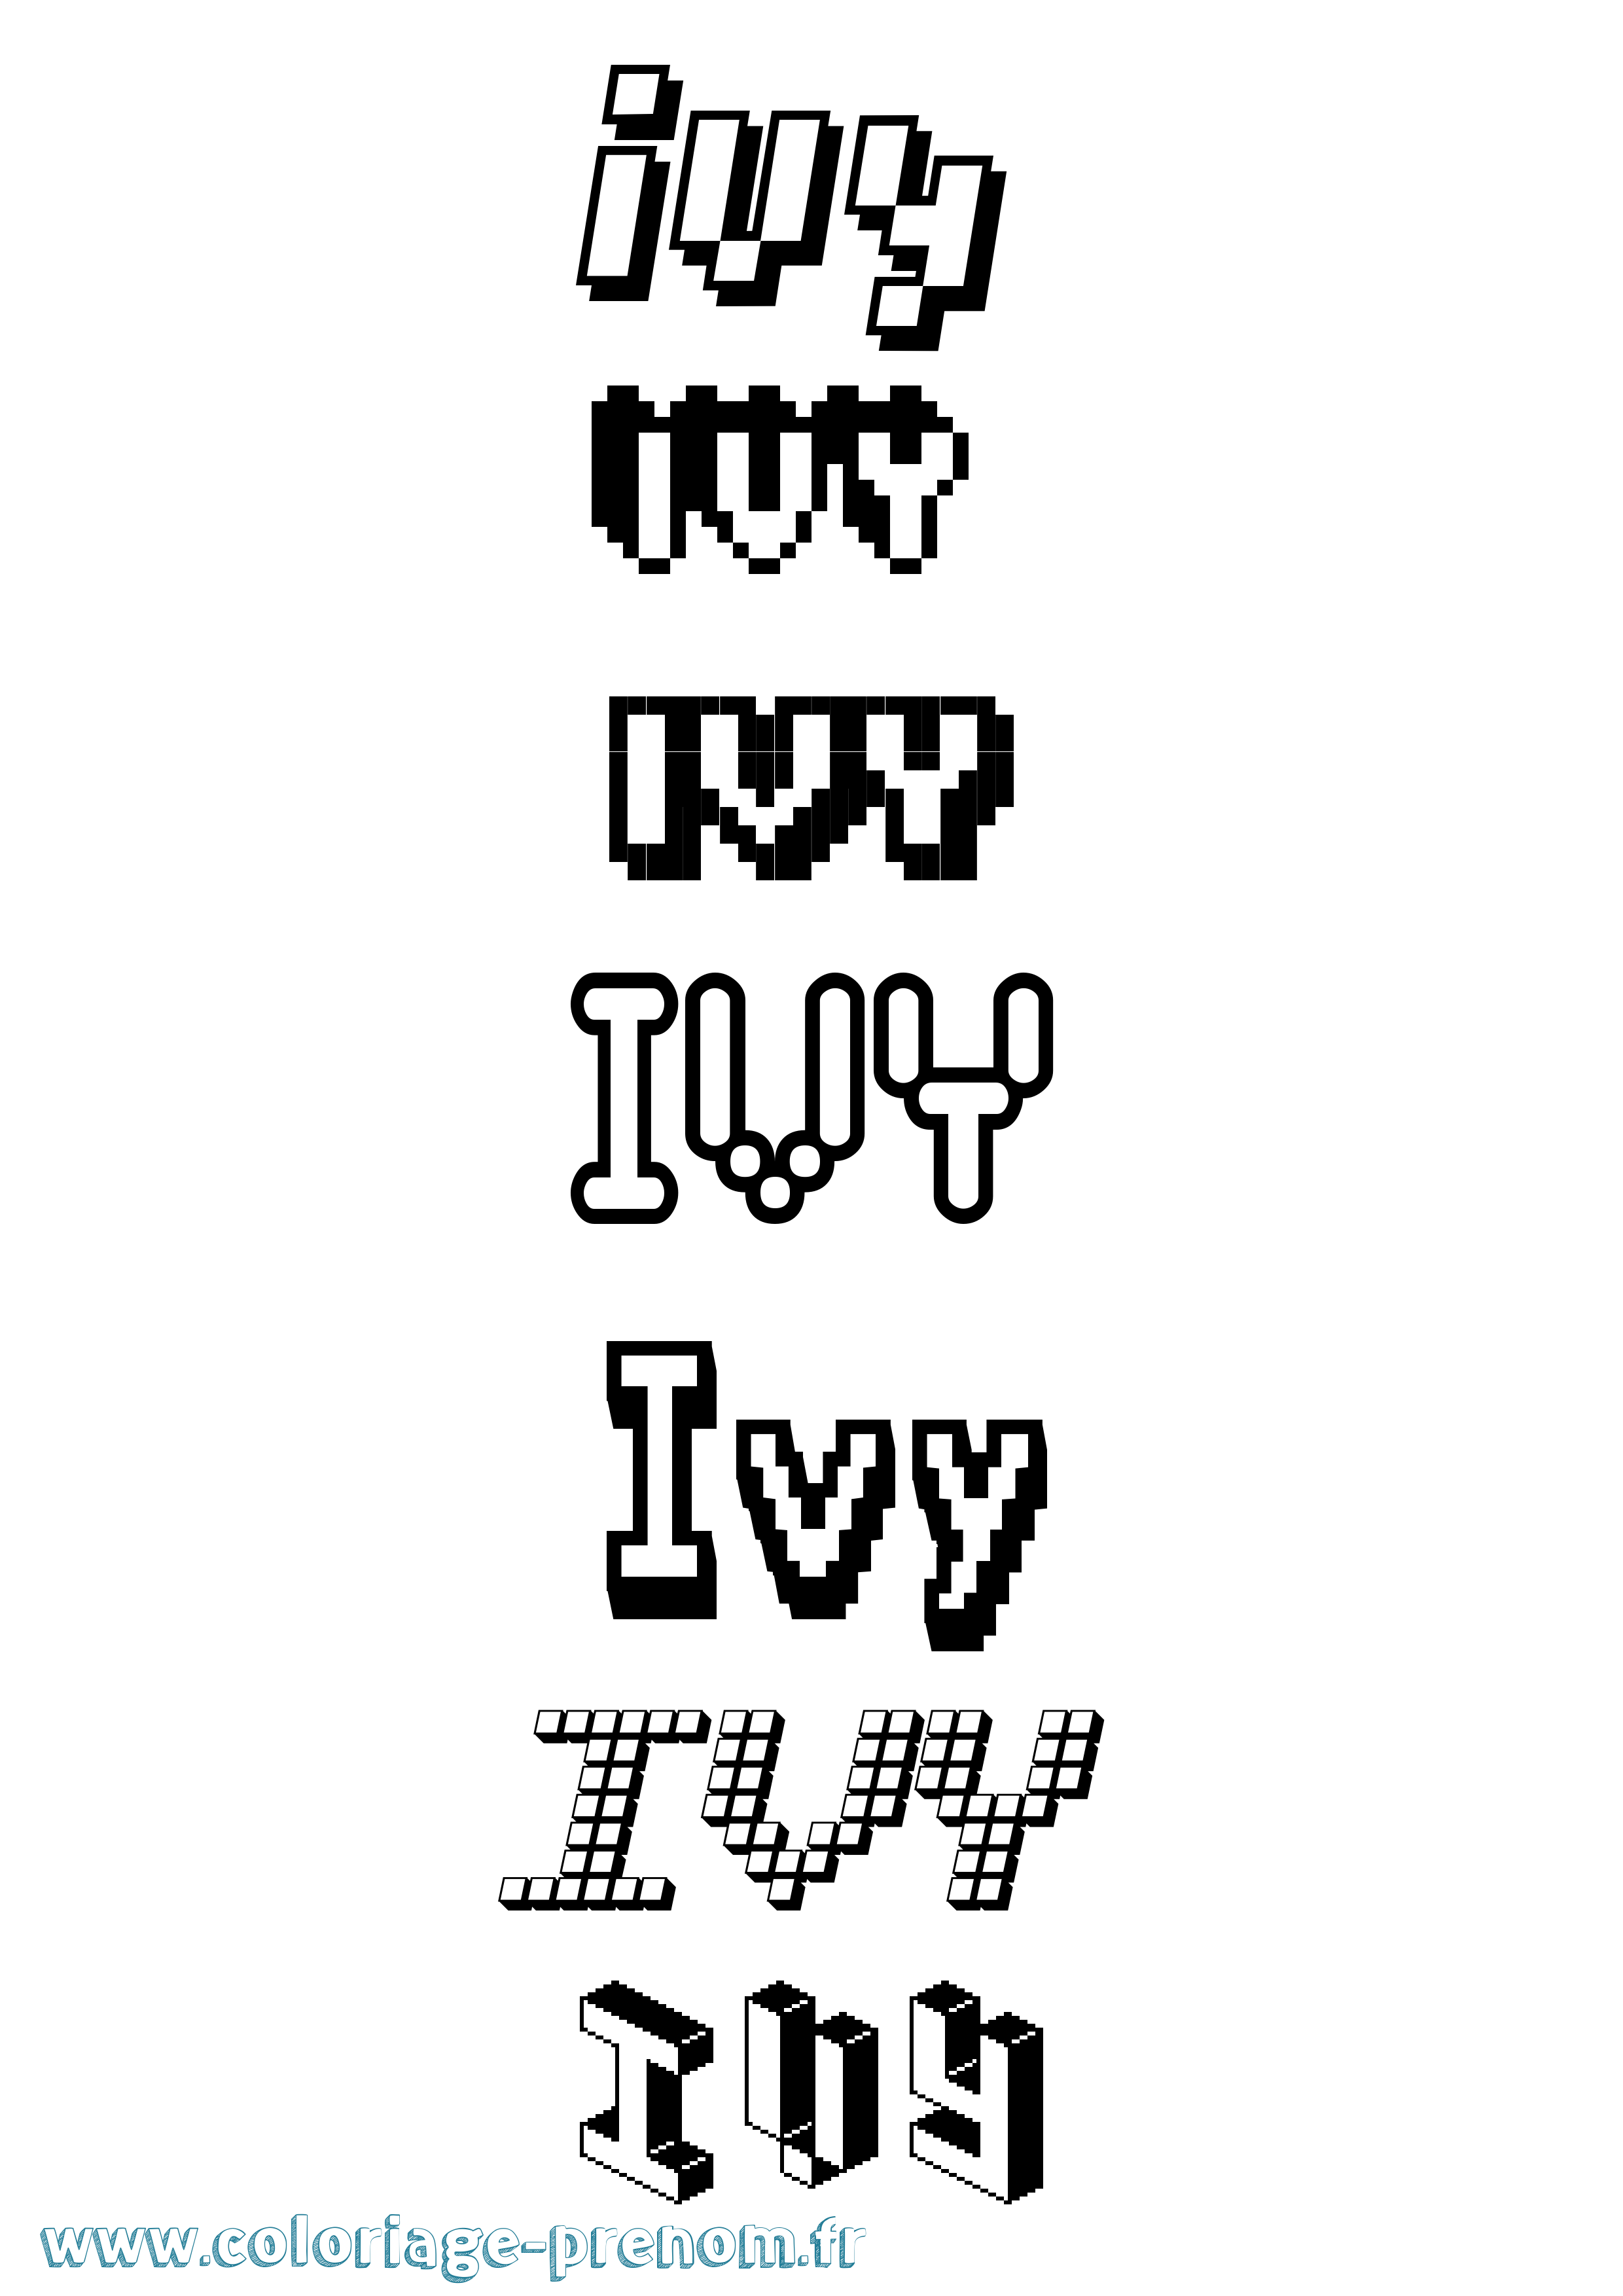 Coloriage prénom Ivy Pixel